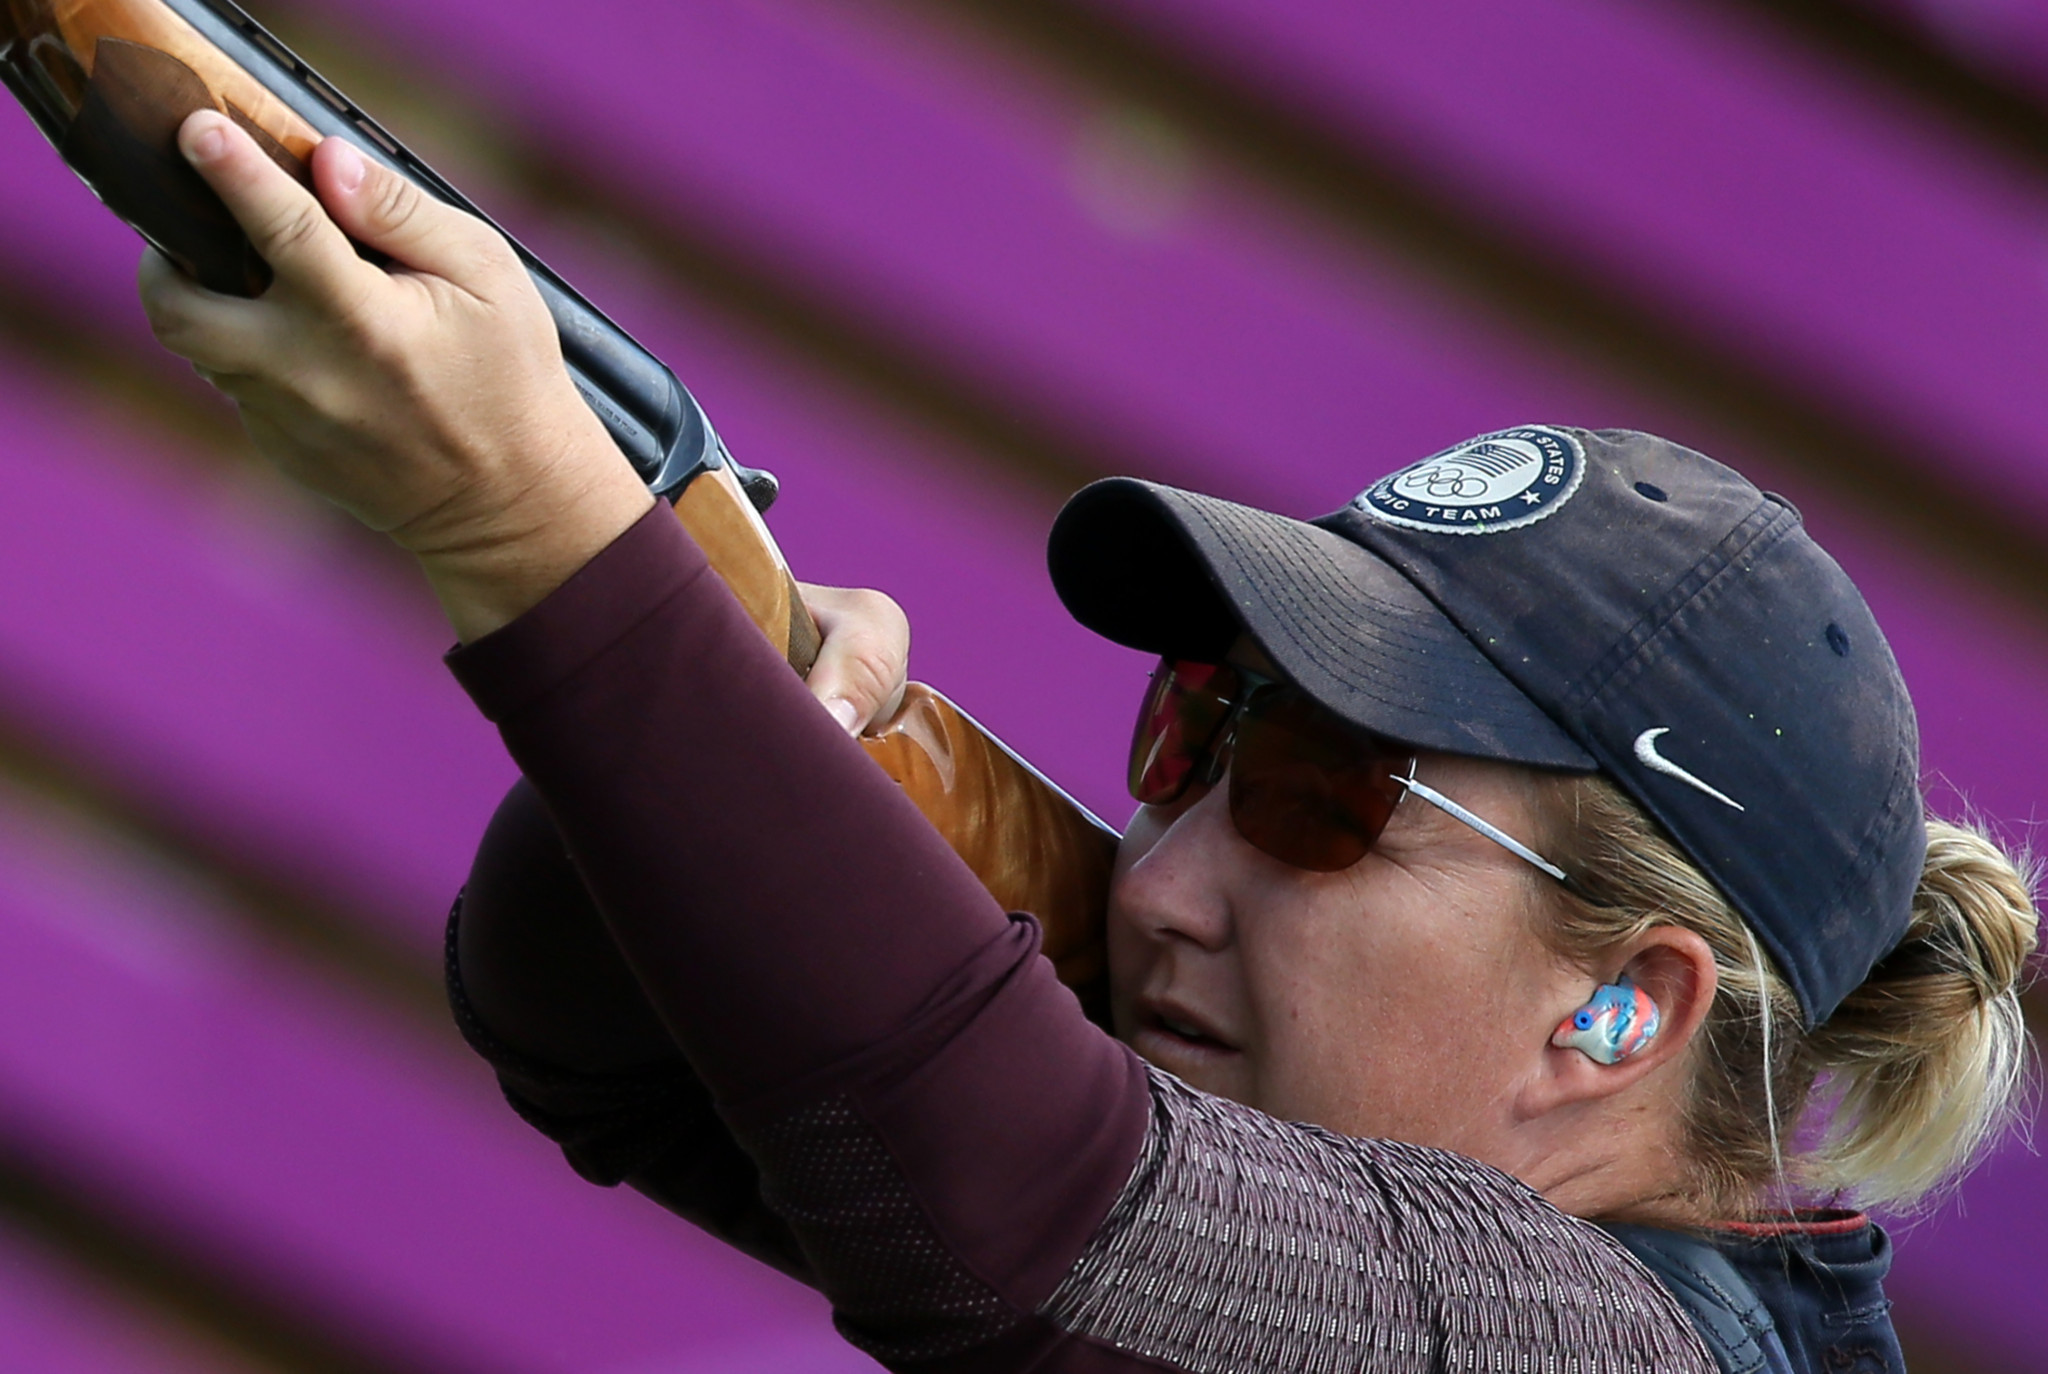  Rhode ready to strike for gold in women’s skeet at ISSF Shotgun World Championship